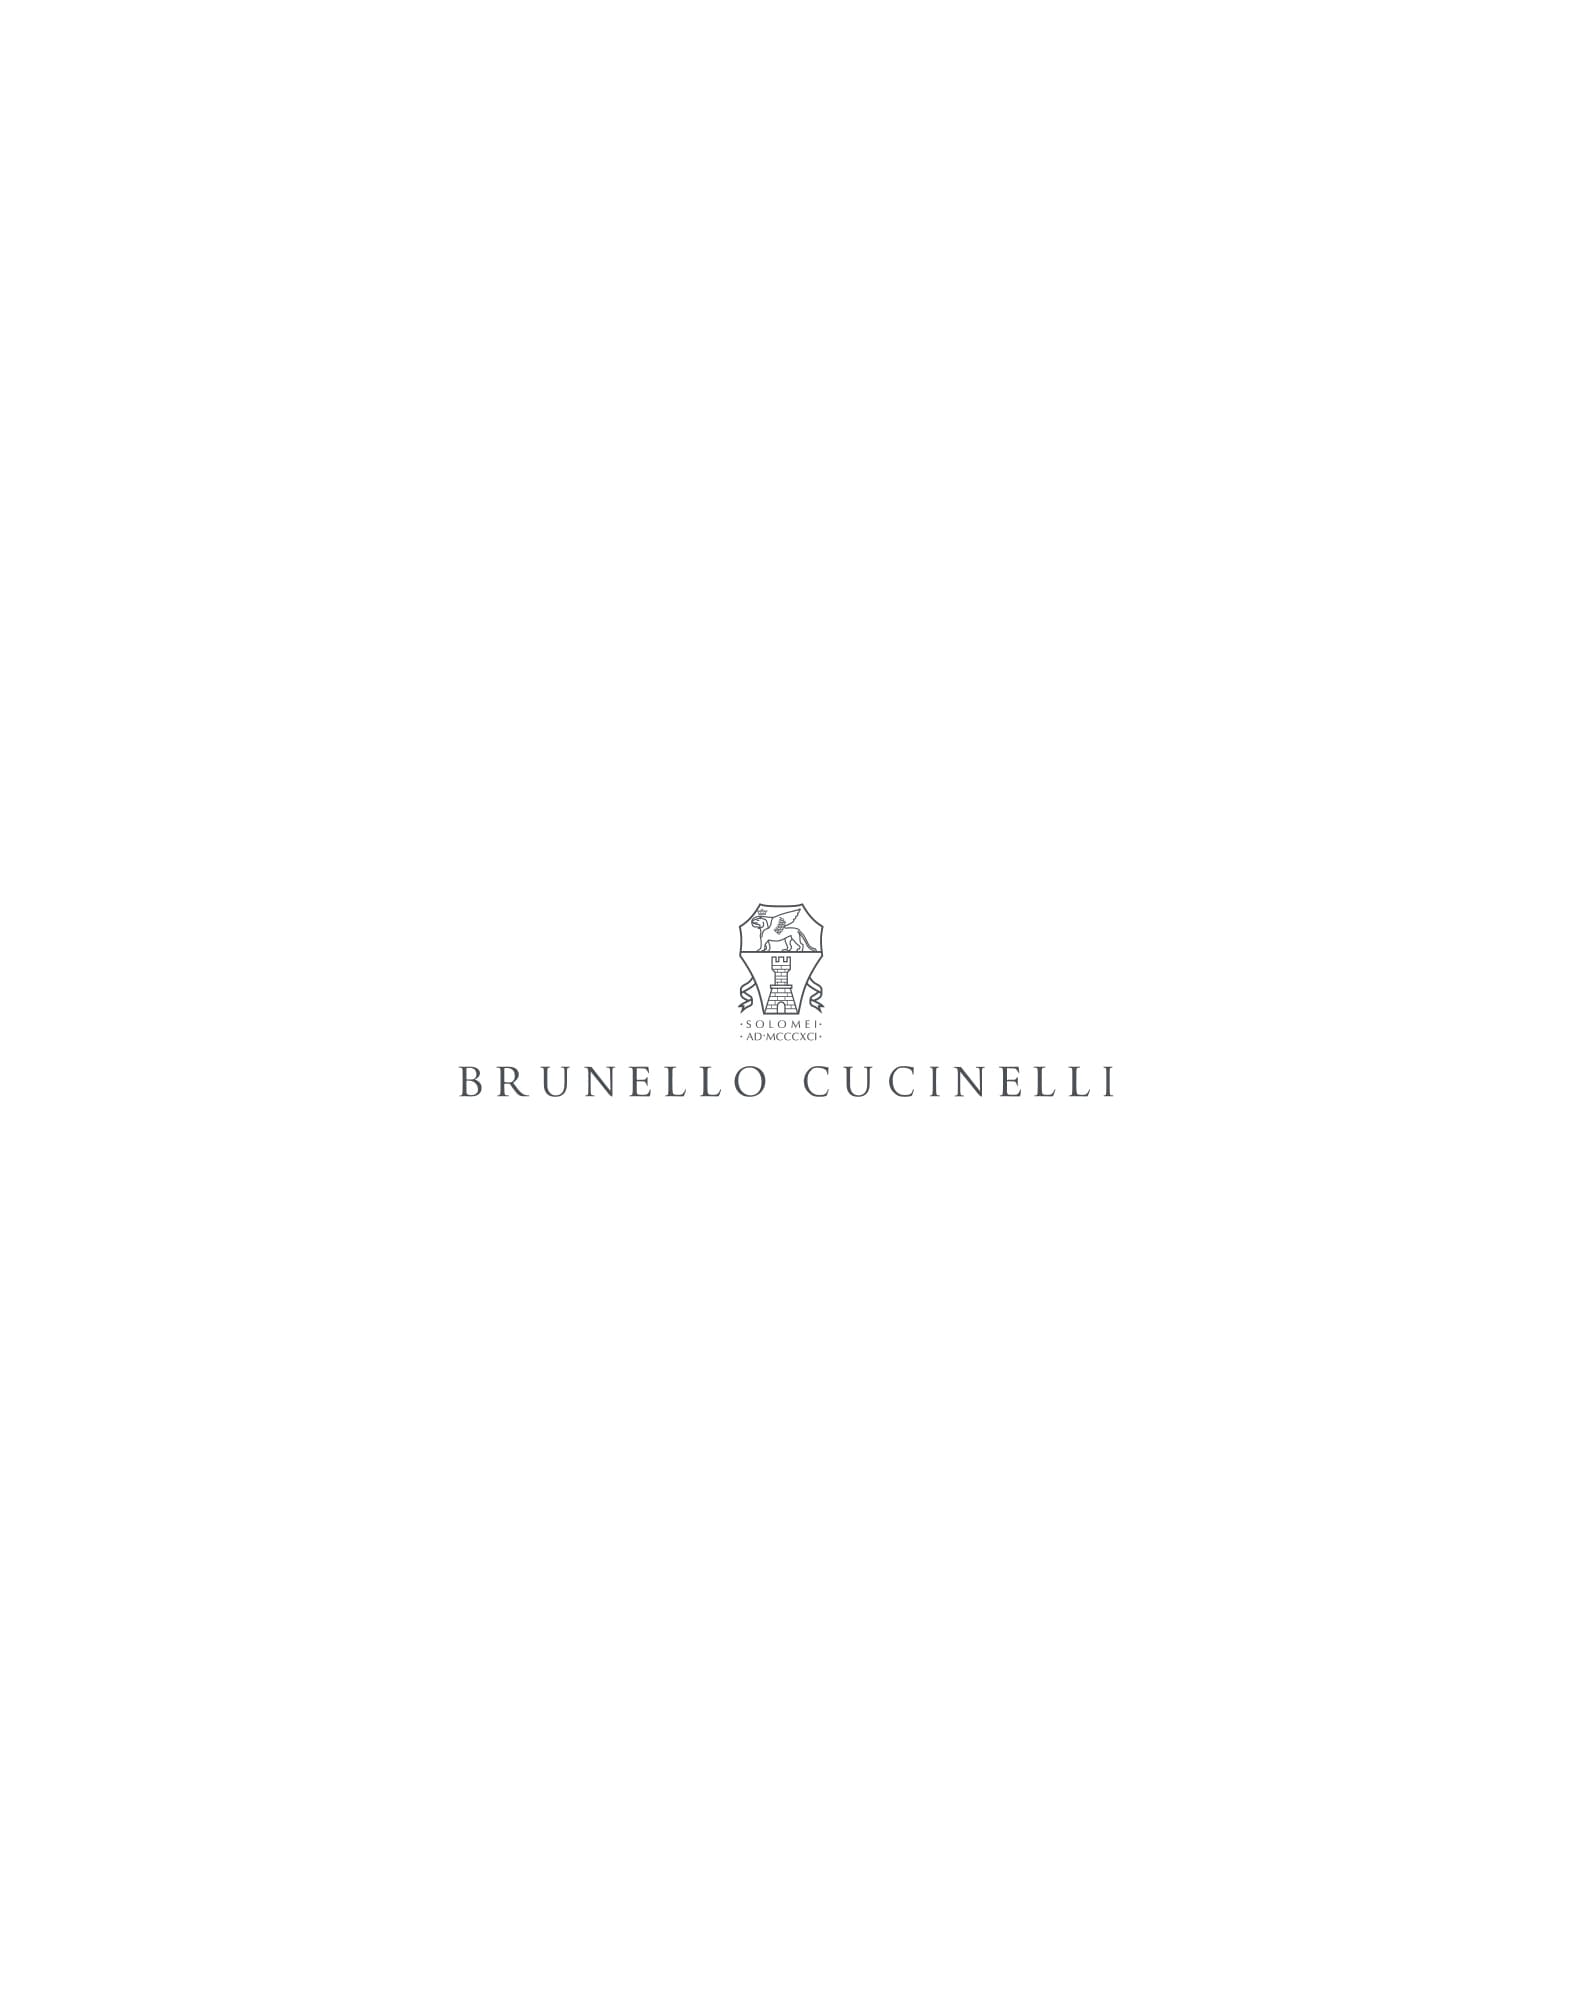 Discover Look 232MOUTFITOTTOBRE2 - Brunello Cucinelli